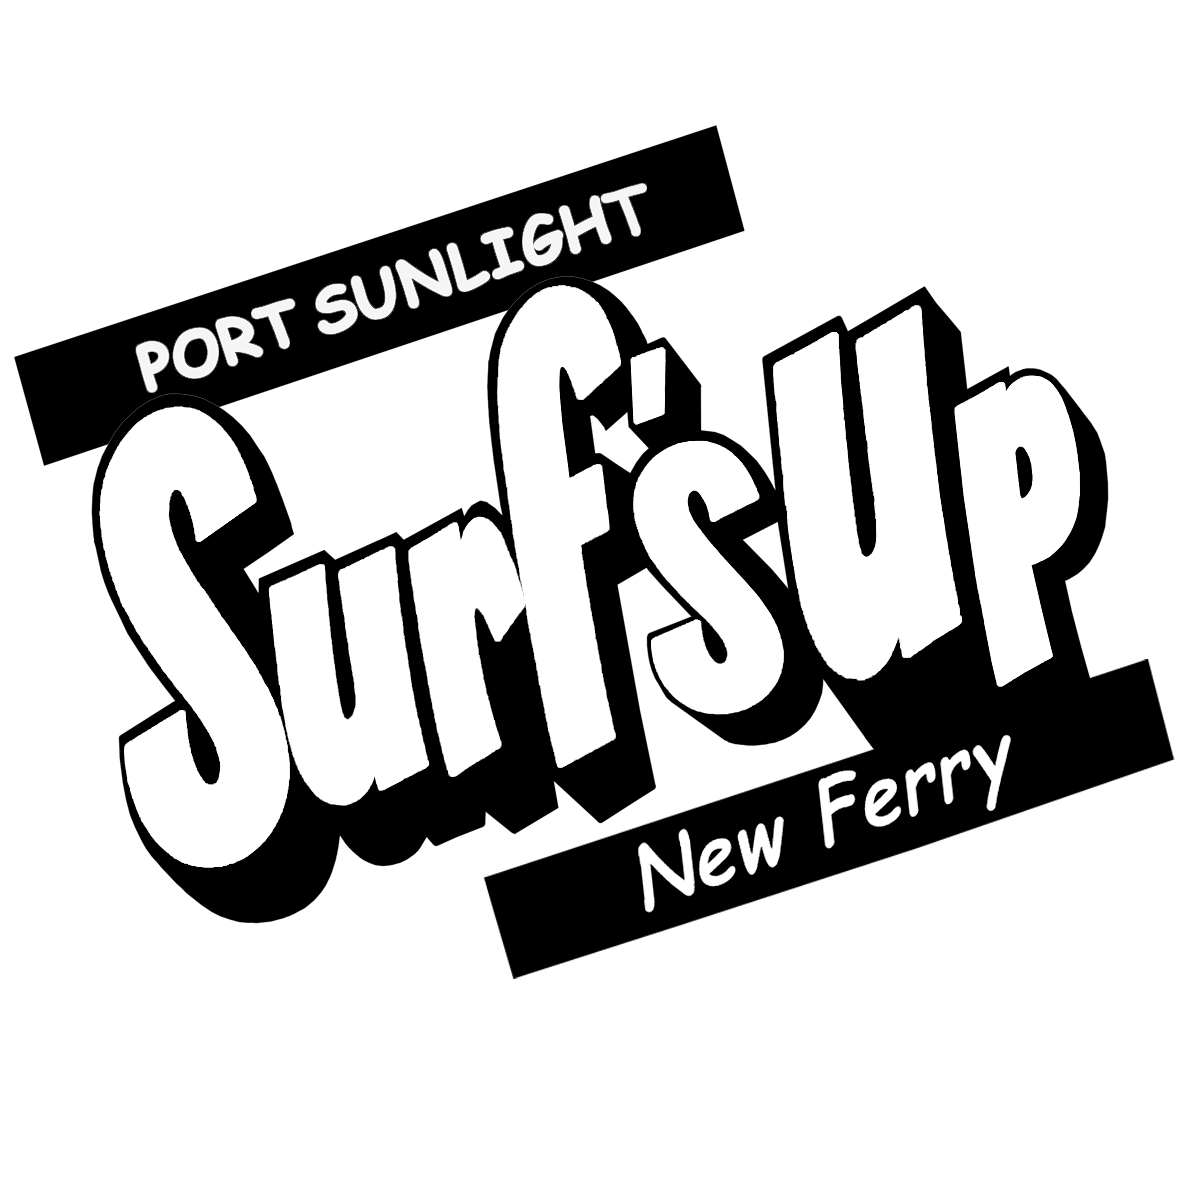 Port Sunlight (new Ferry) Surf’s Up - Steve Hardstaff